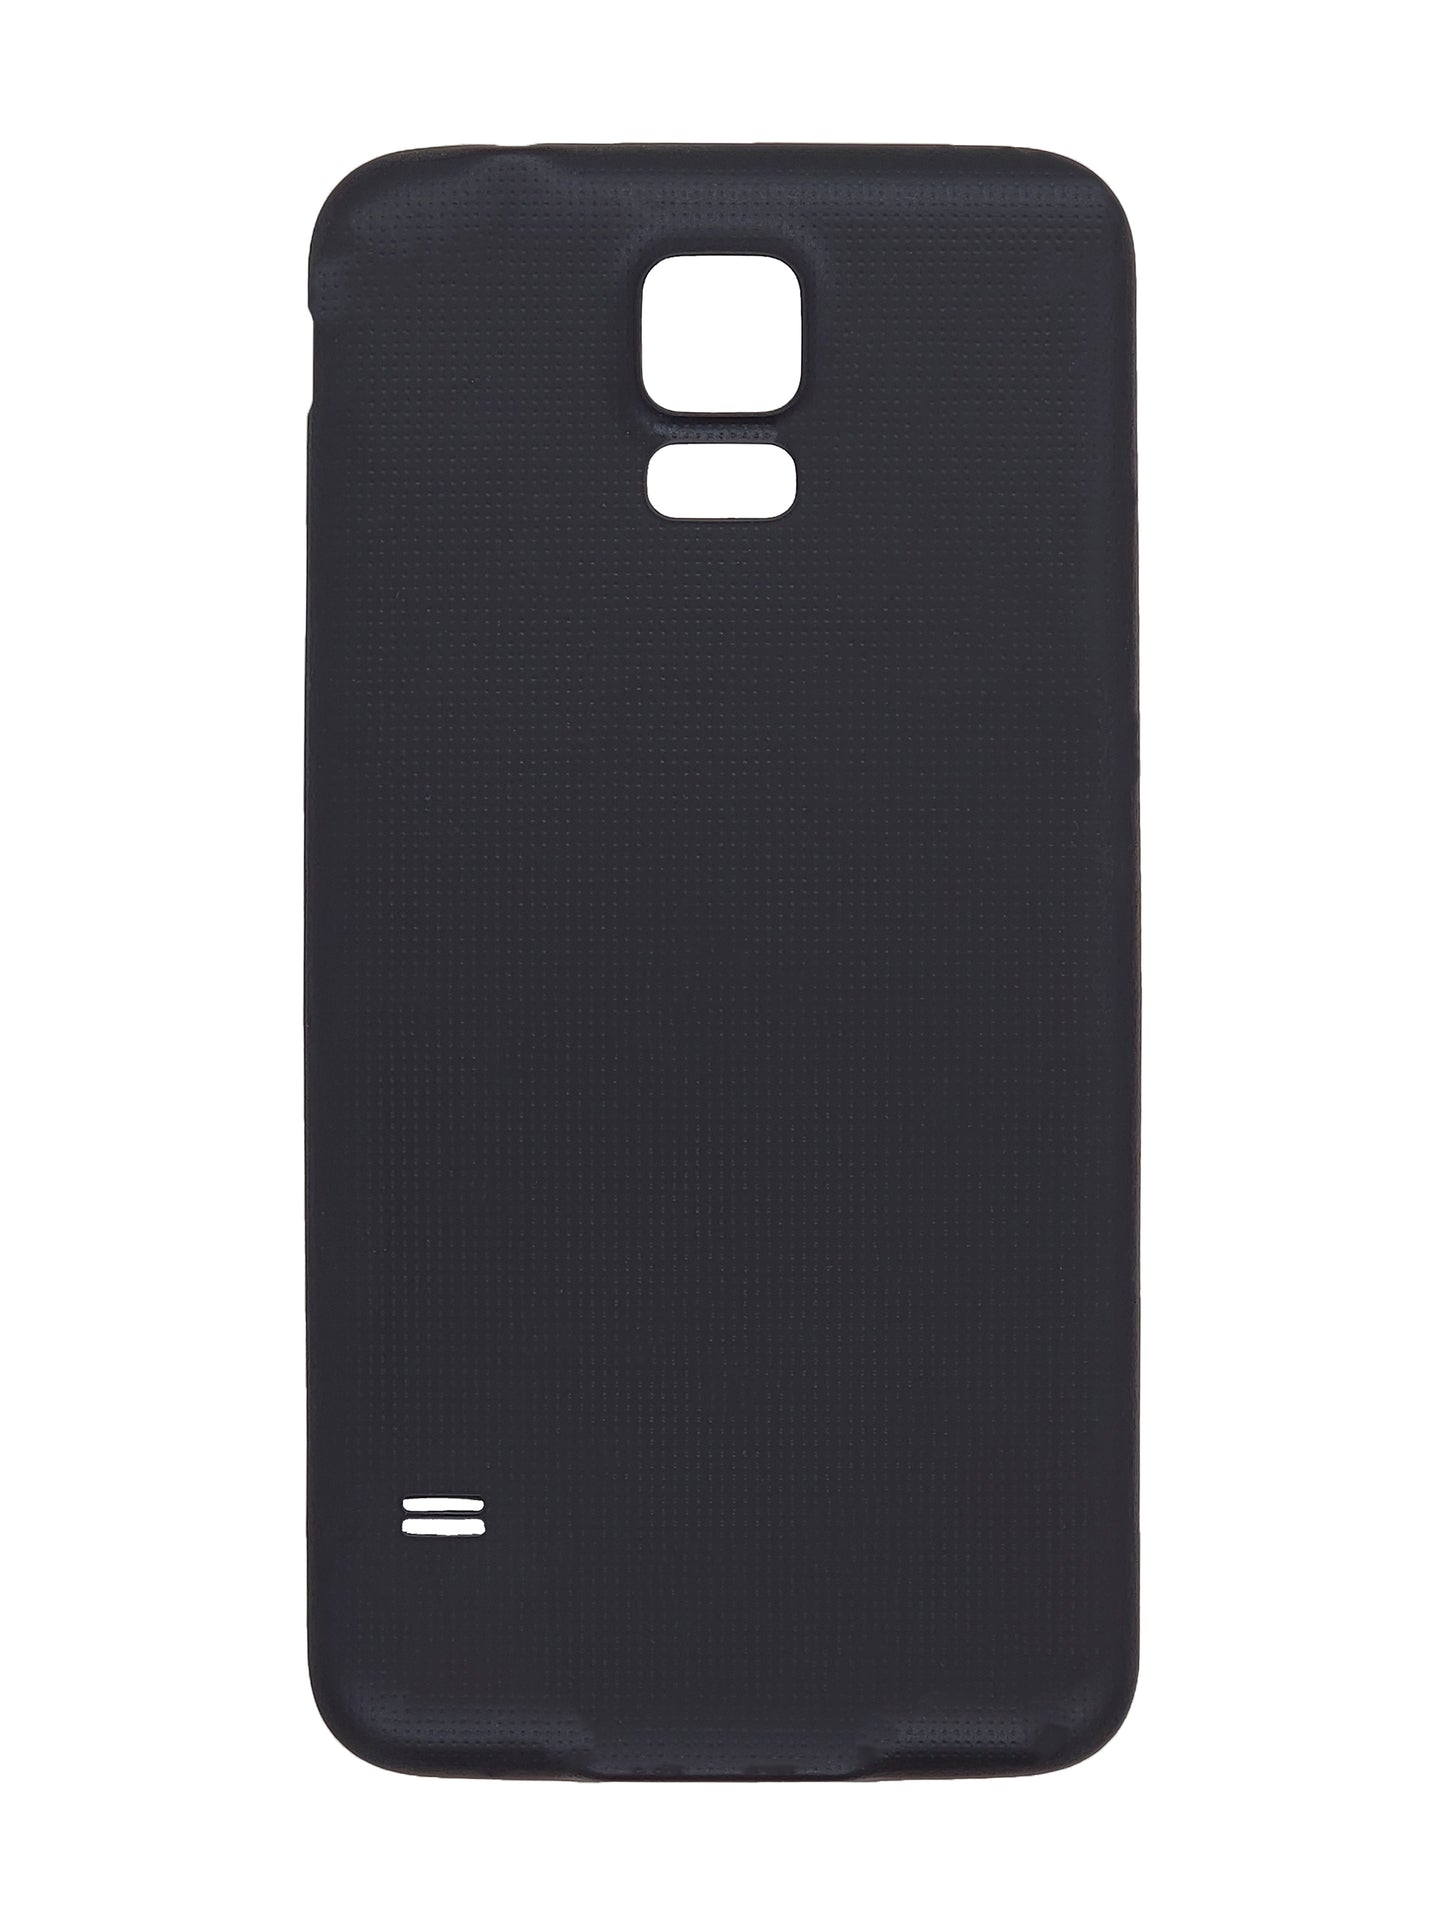 SGS S5 Neo Back Cover (Black)